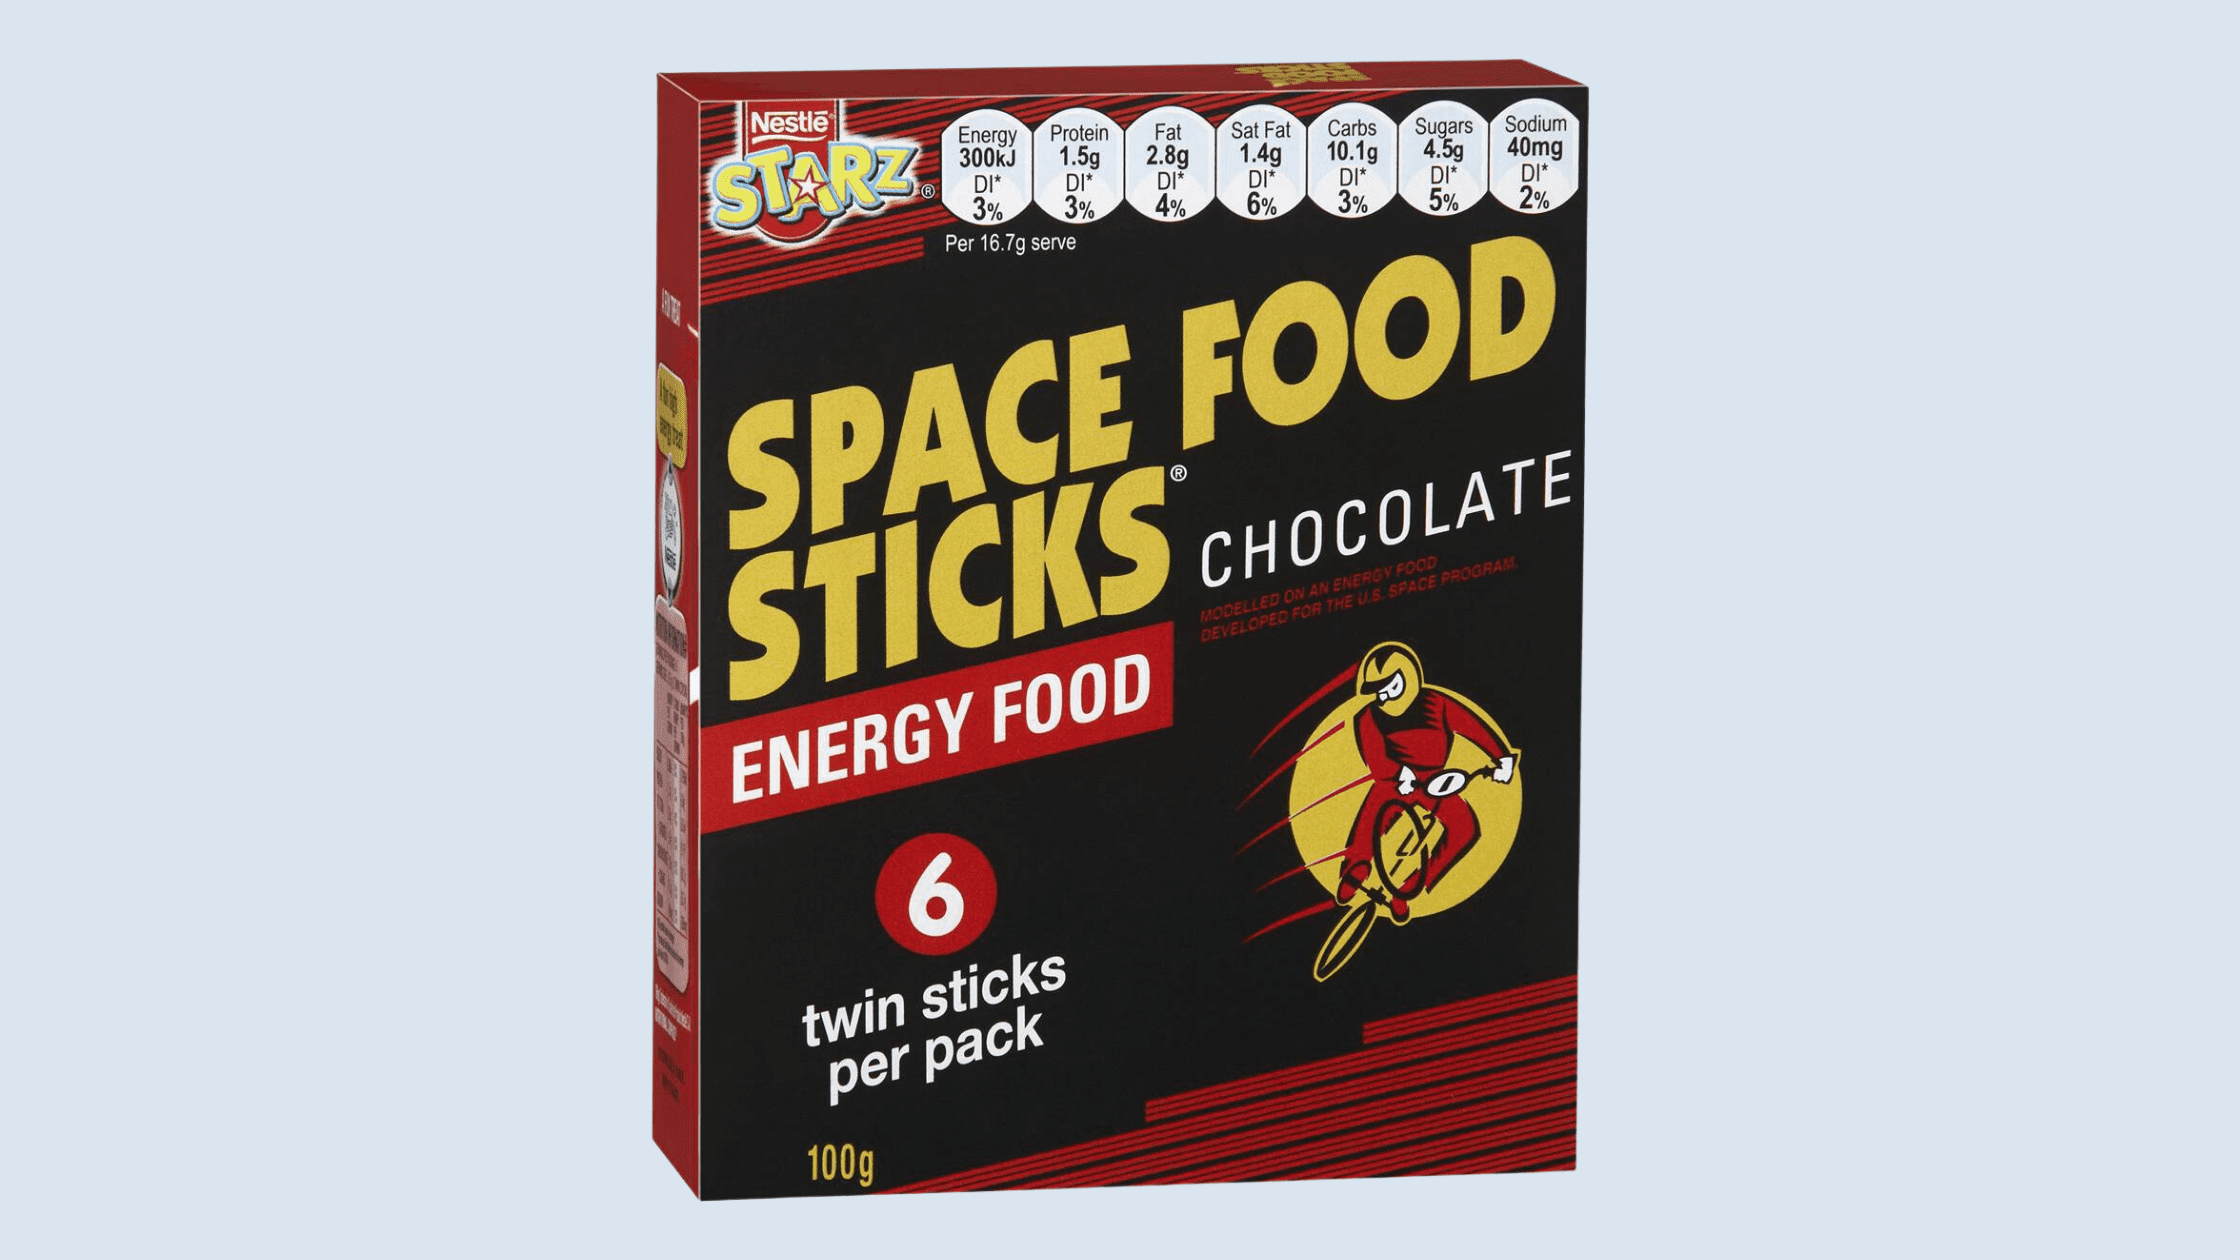 Space Food Sticks